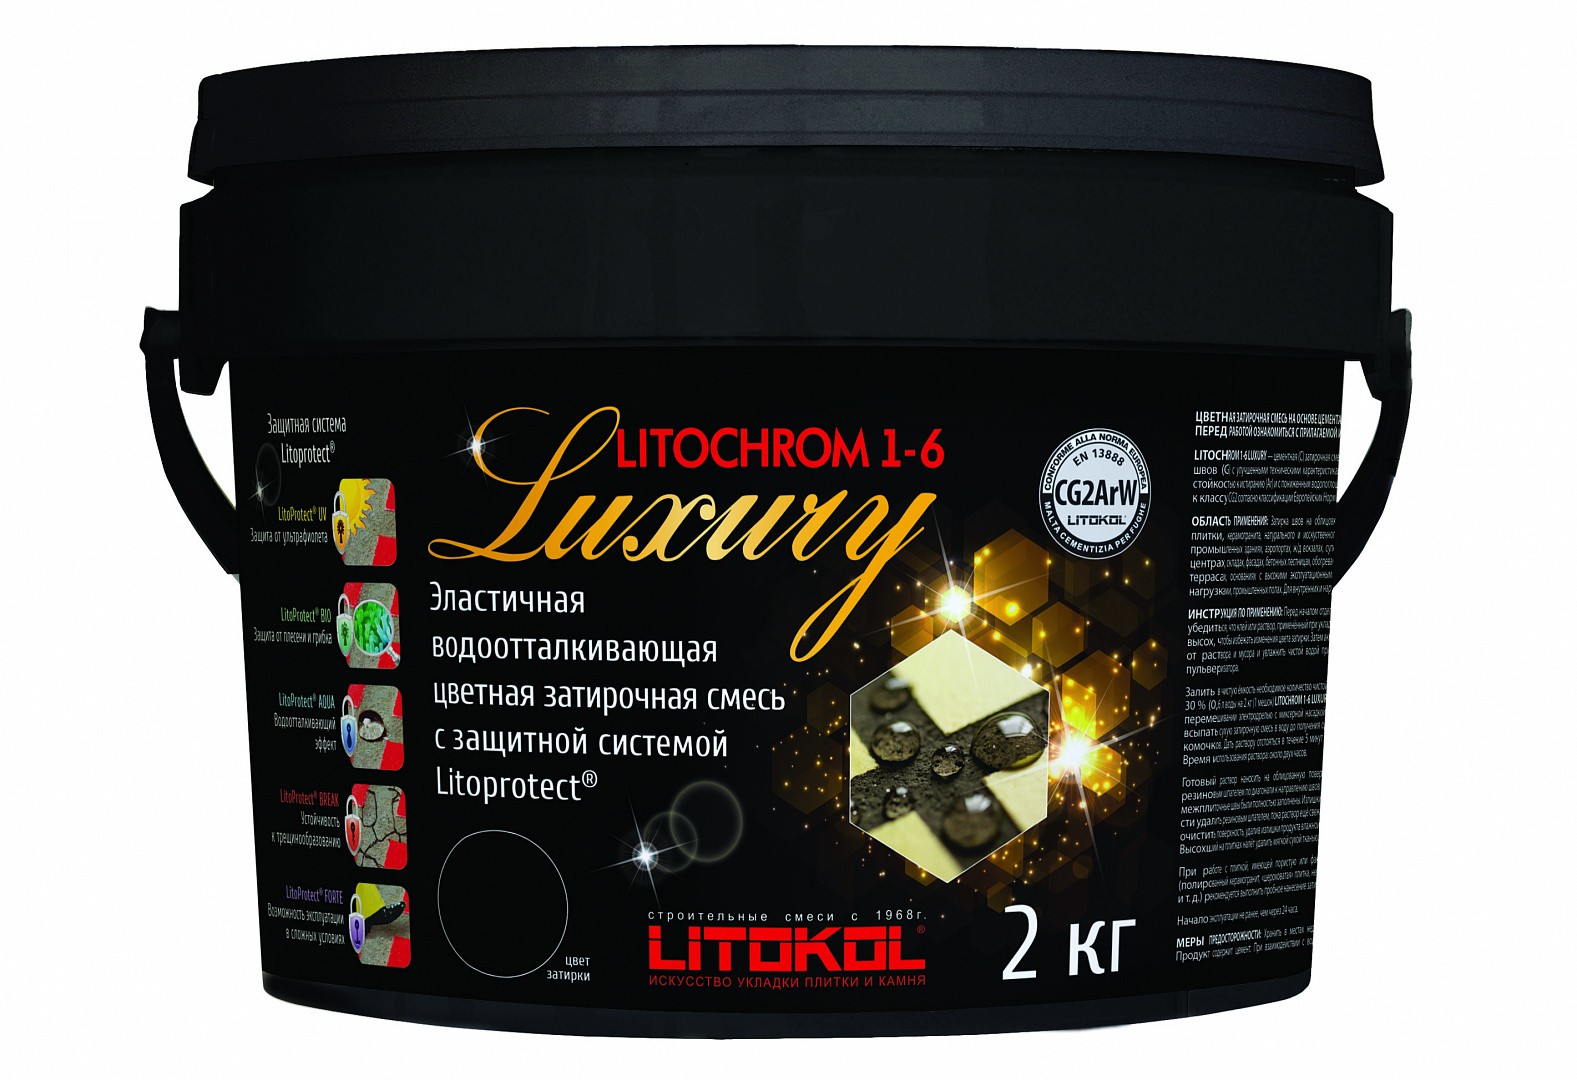 Цементная затирочная смесь LITOCHROM 1-6 LUXURY C.630